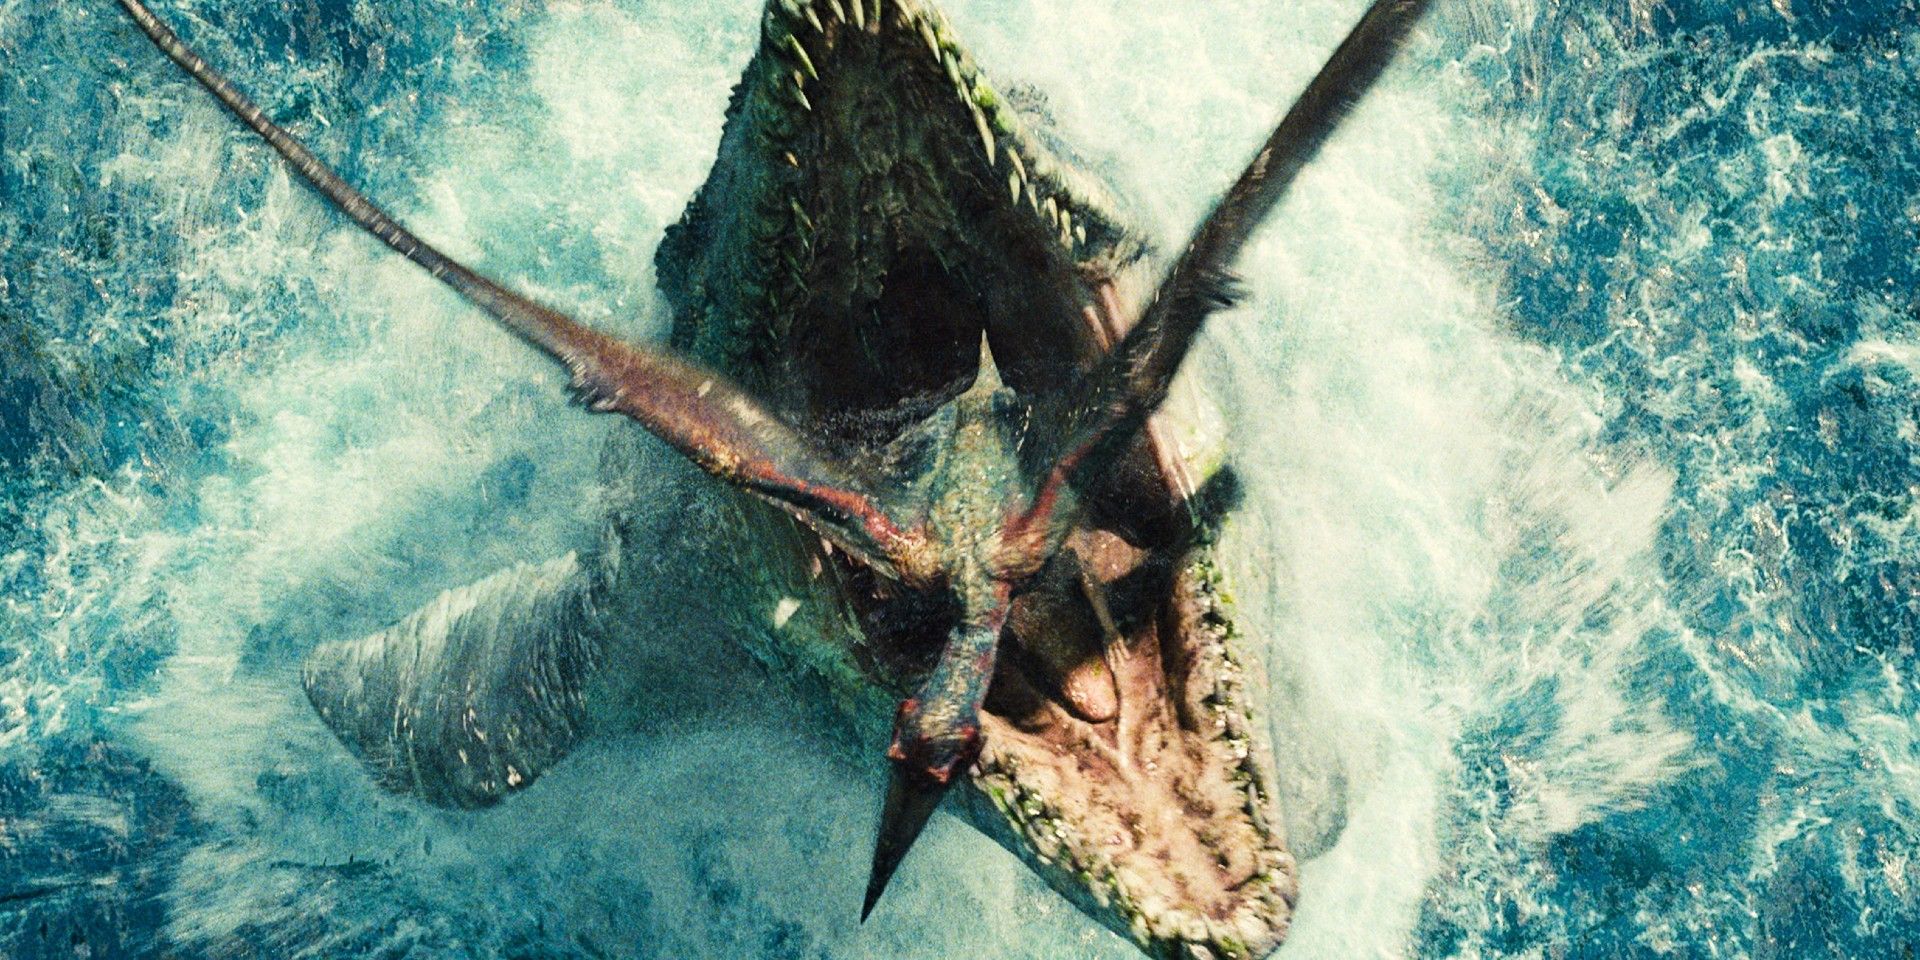 The mosasaurus eating a flying dinosaur in Jurassic World